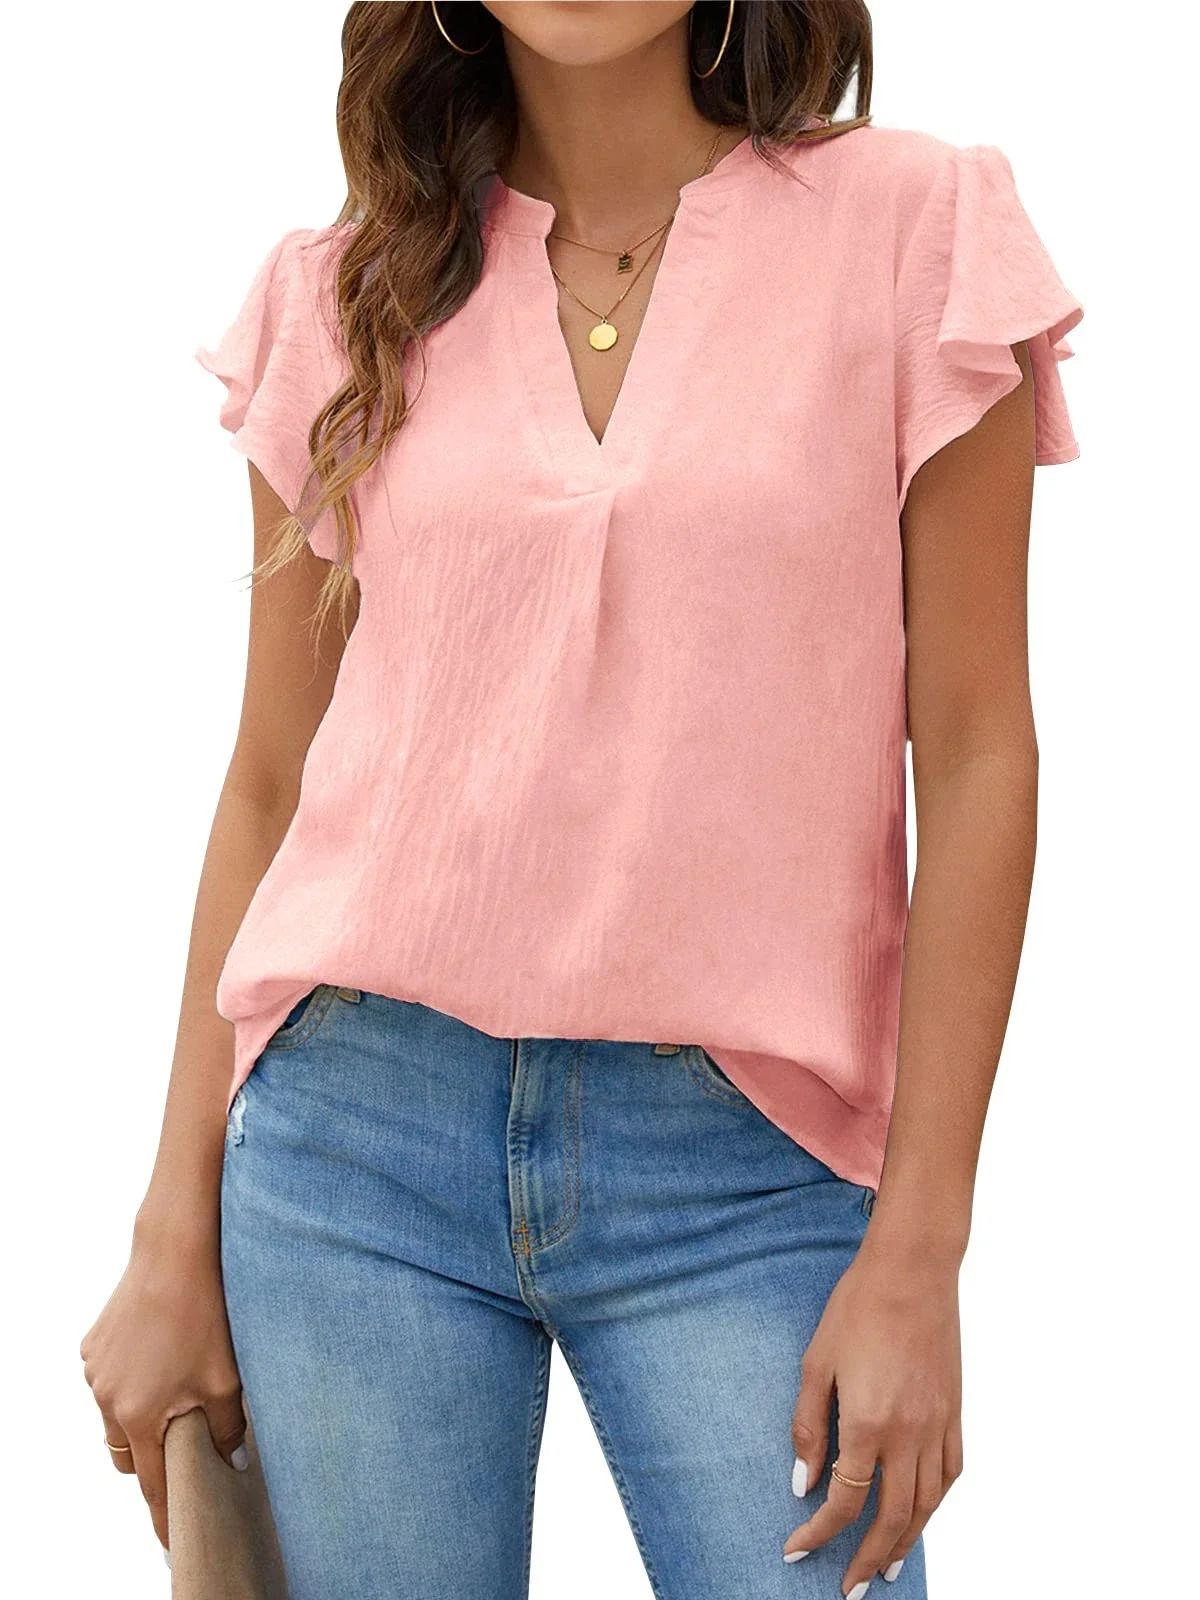 Fantaslook Blouses for Women Dressy V Neck Ruffle Sleeve Summer Tops Casual Flowy Shirts | Walmart (US)